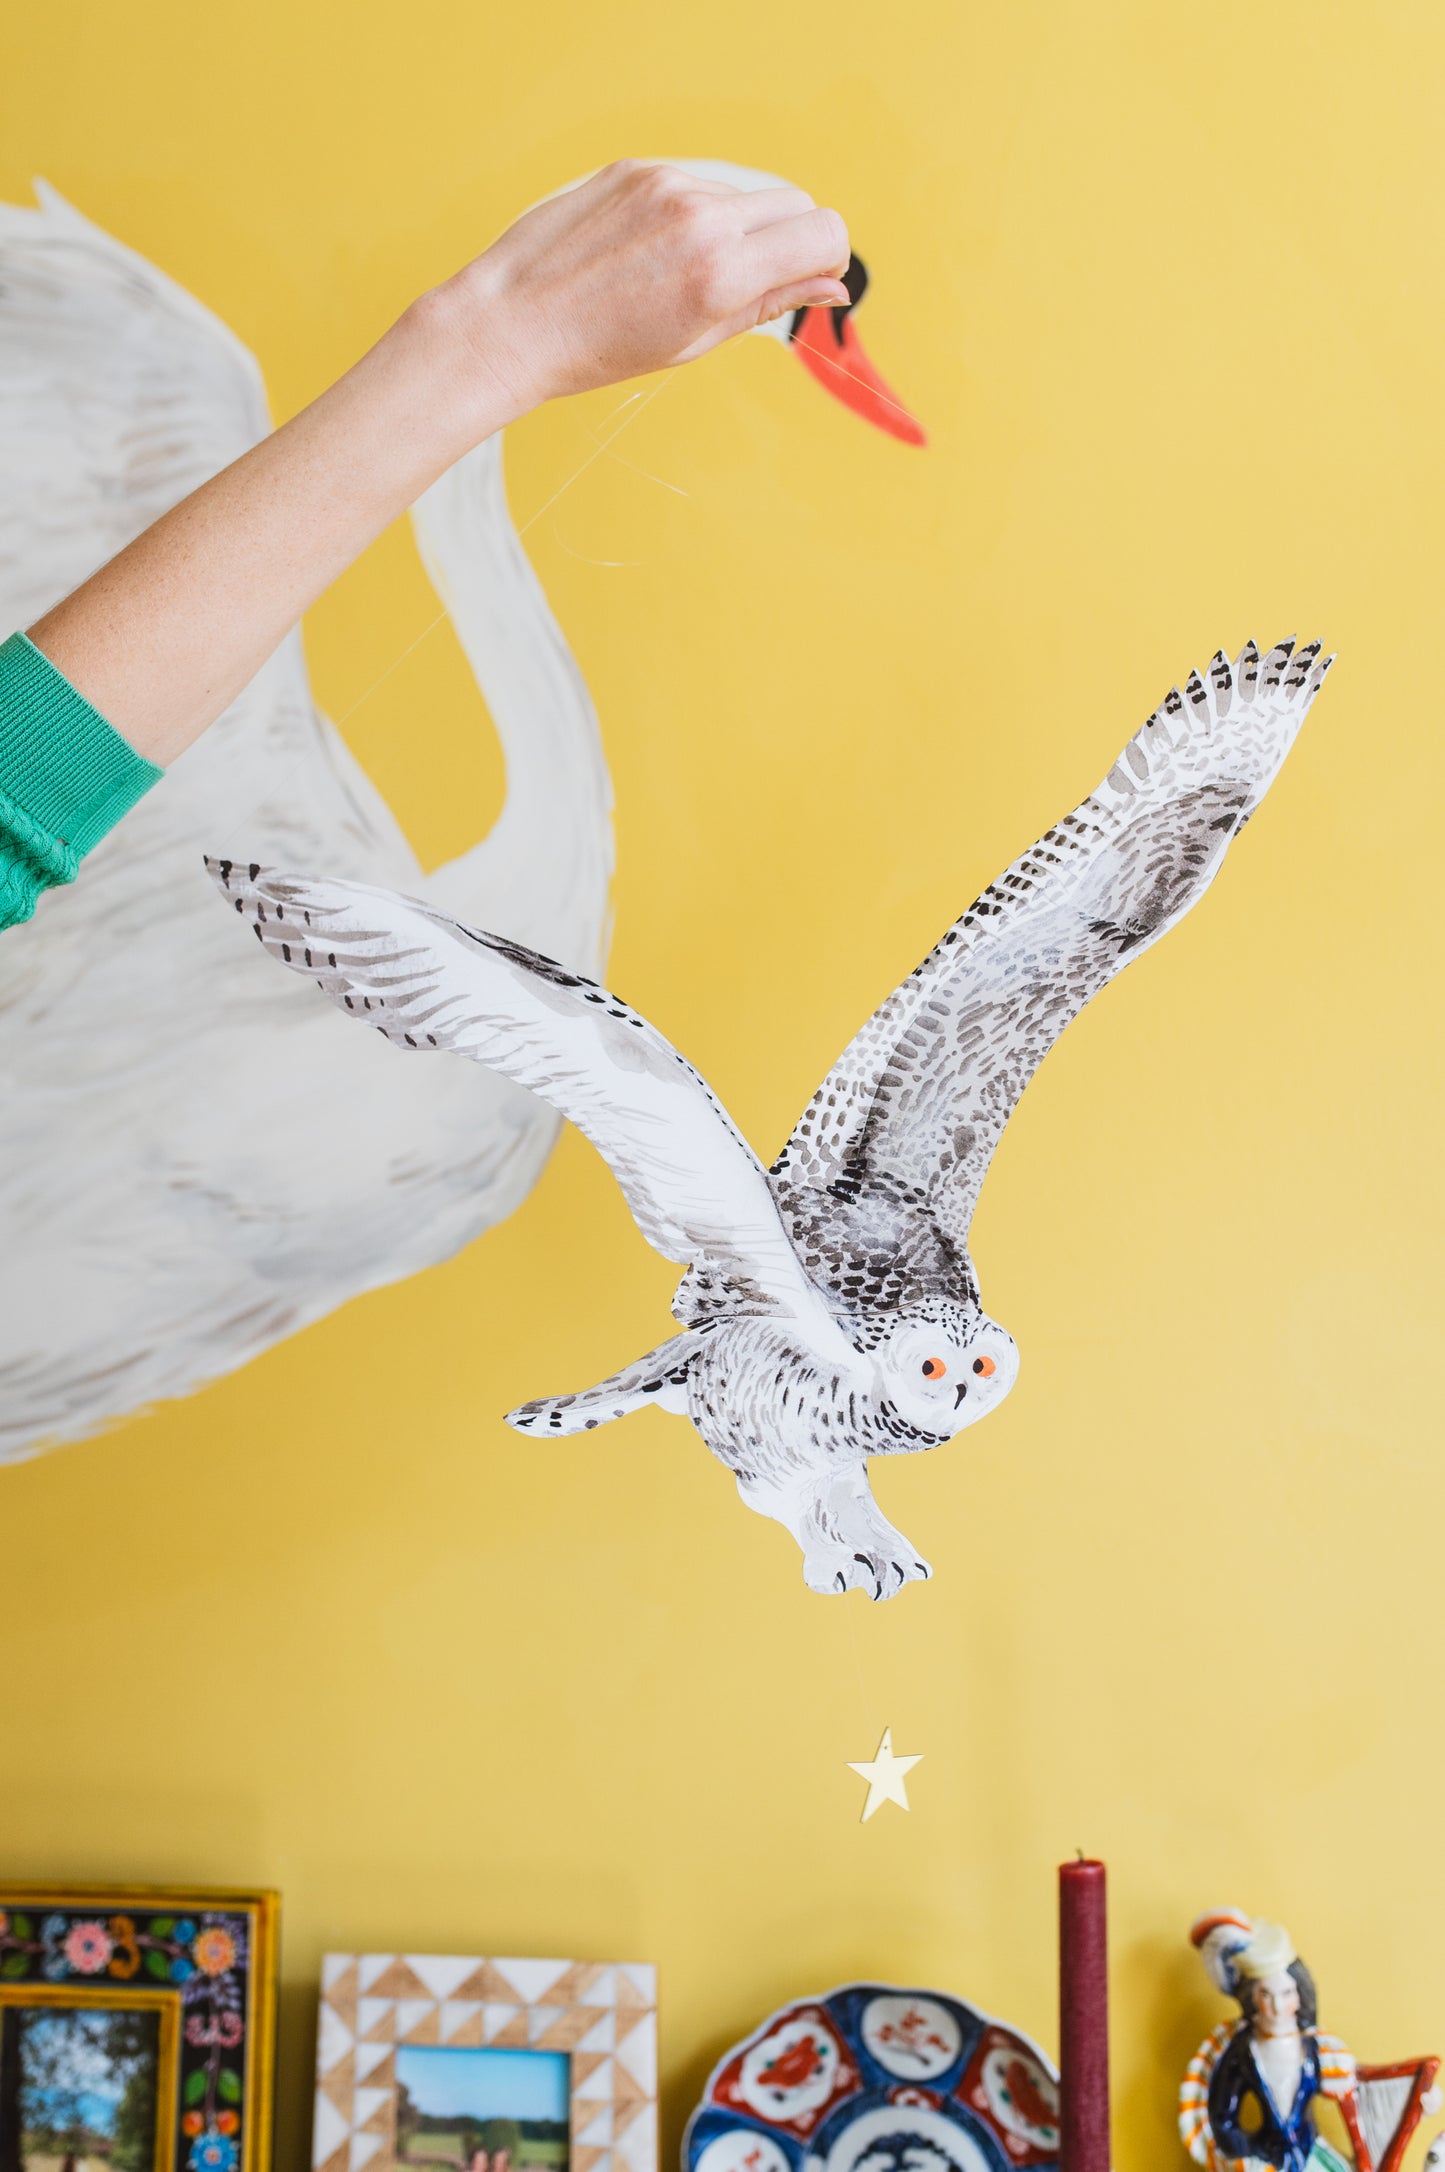 Snowy Owl Decorative Bird Art